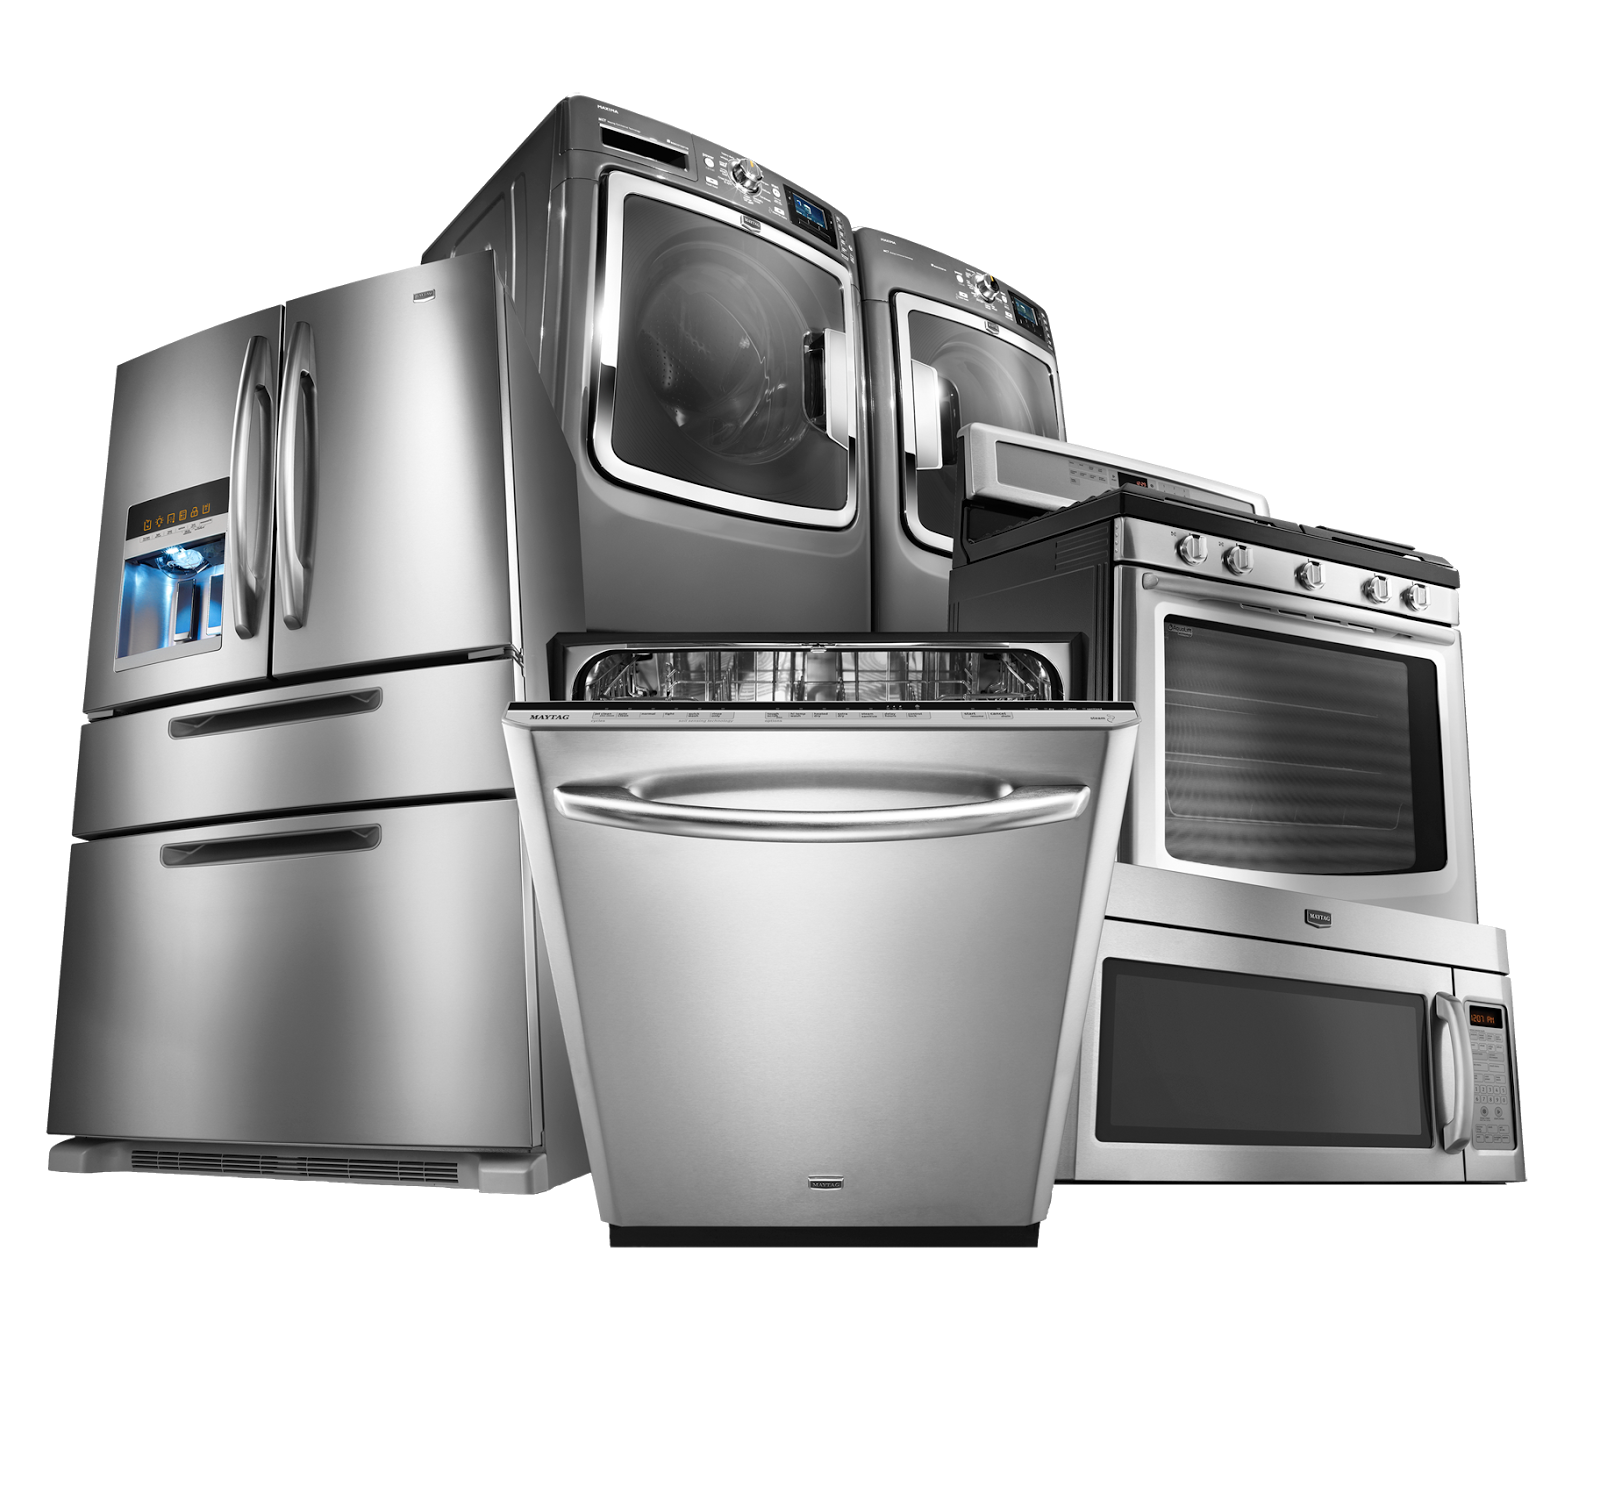 Better Appliances Adrian Designs